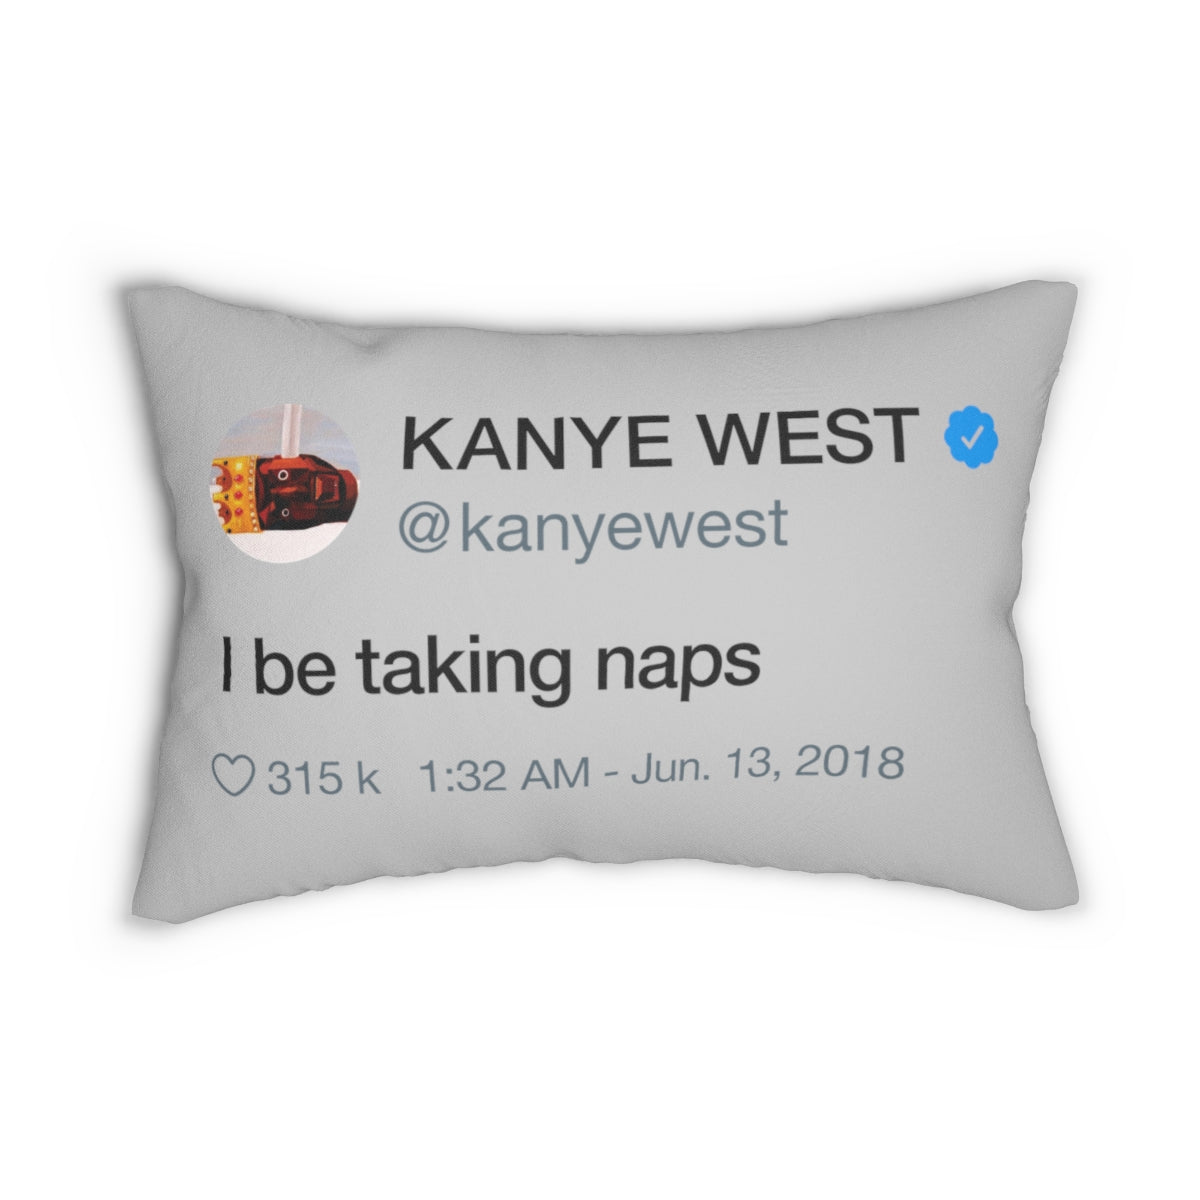 Kanye West Naps Pillow + Pillow Sham - I be taking naps